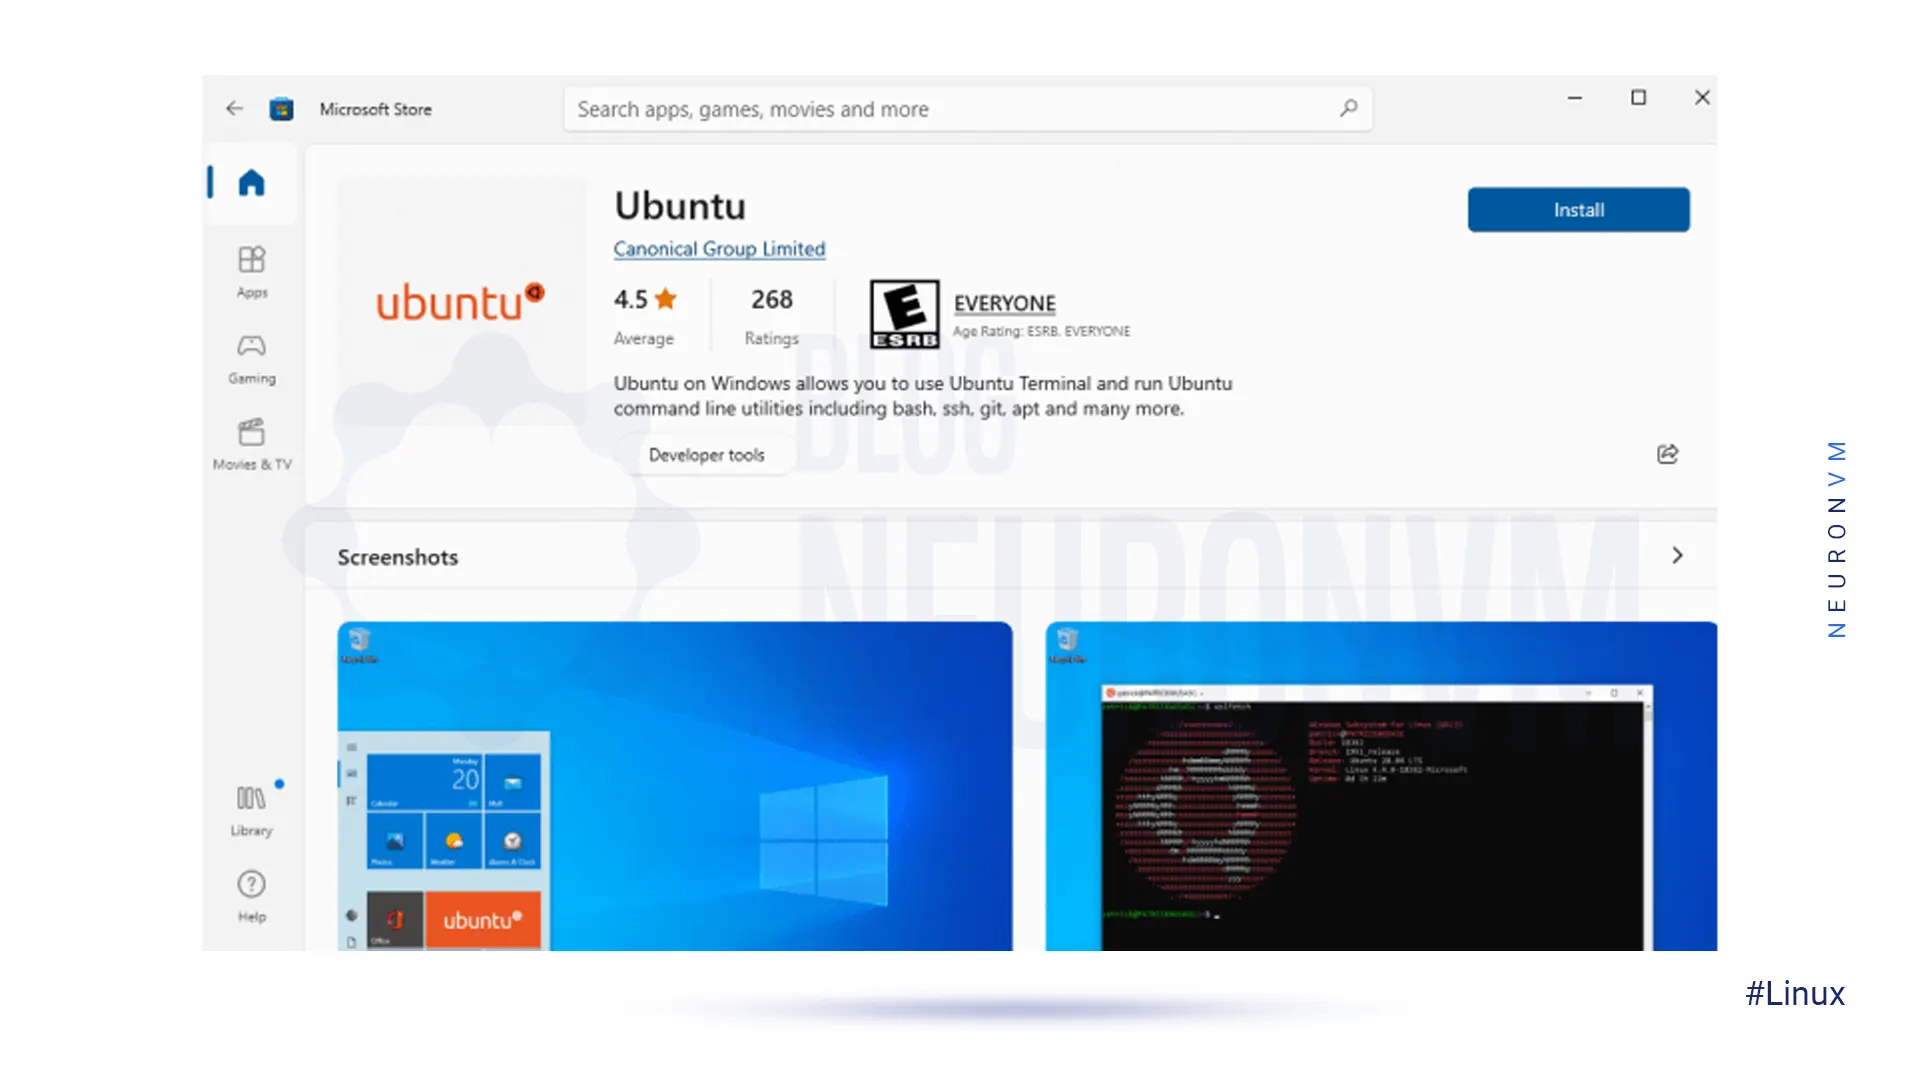 installing-ubuntu-from-microsoft-store - install Ubuntu 18.04 LTS on Windows 10